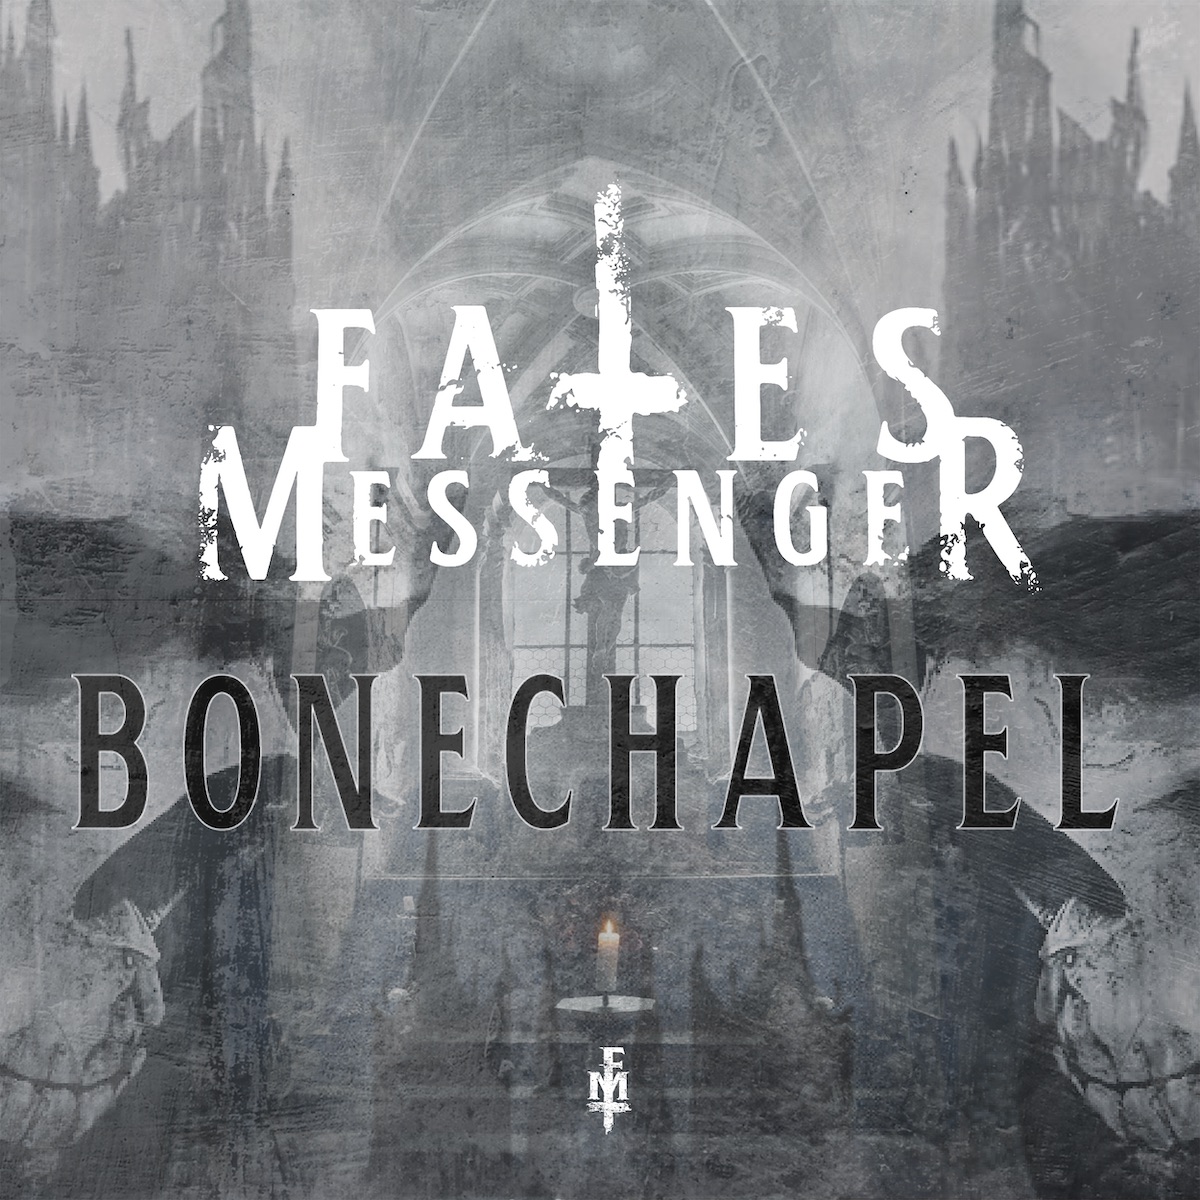 HOT TRACK: “Bonechapel” by Fates Messenger